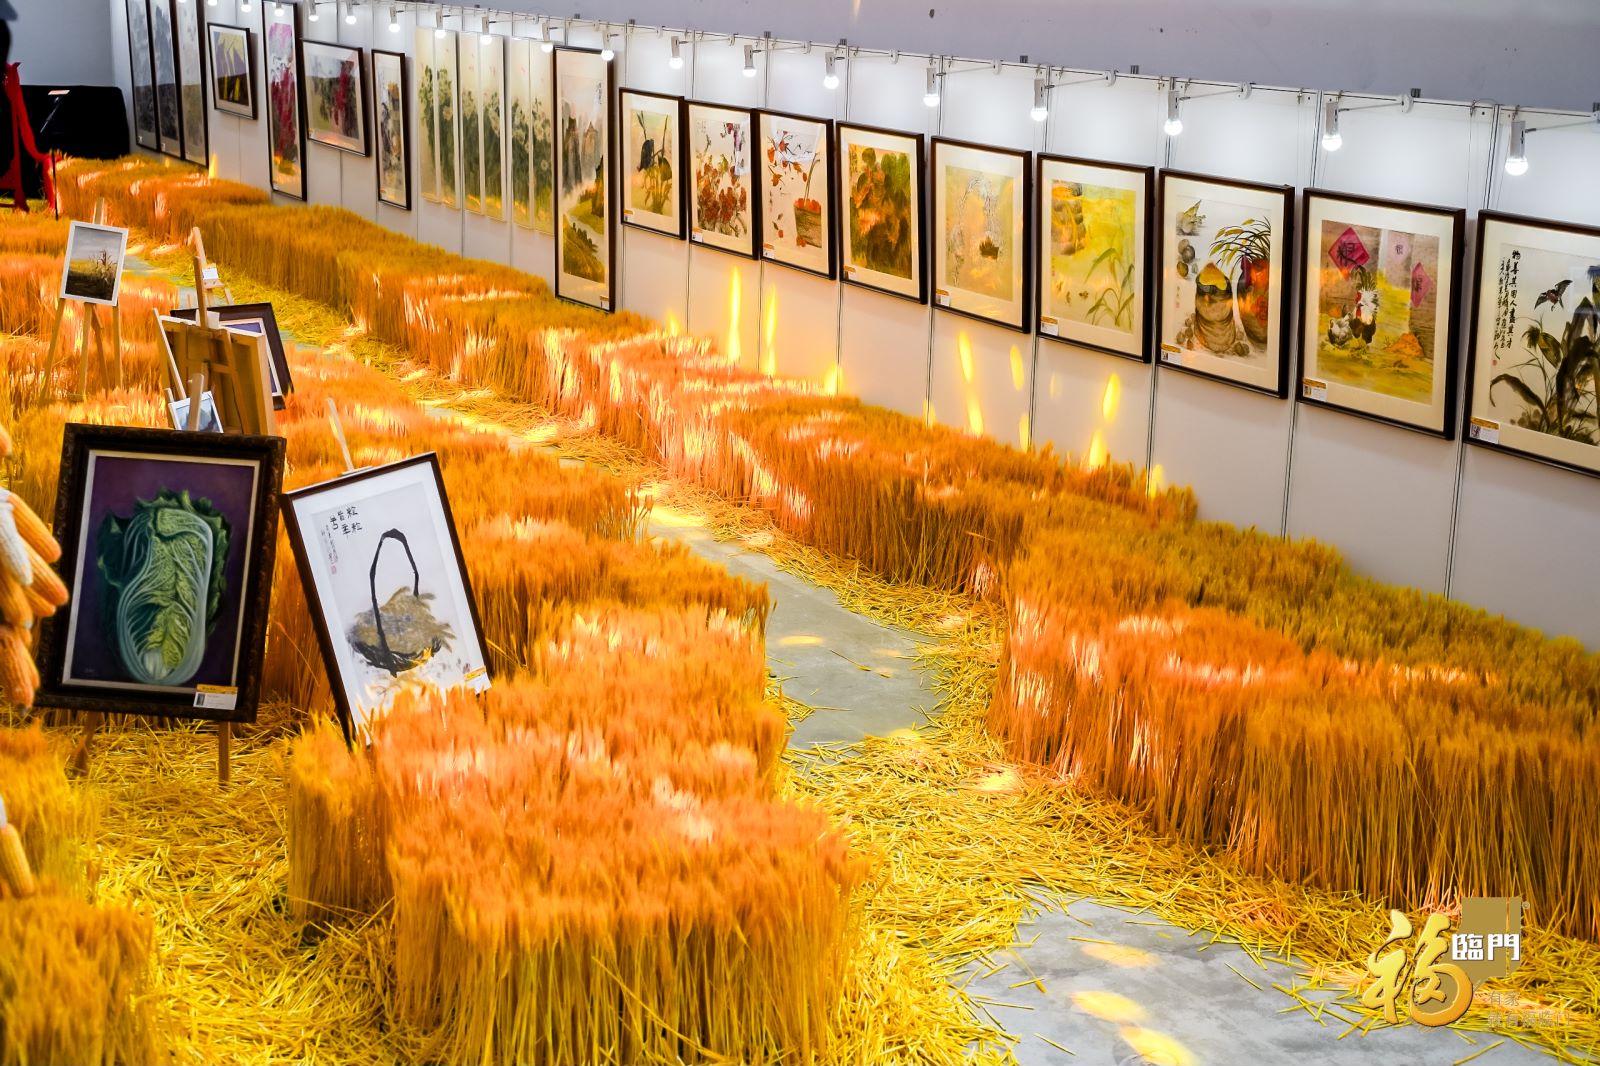 MUSE Design Awards - Art Installation for China's Farmers' Harvest Festival